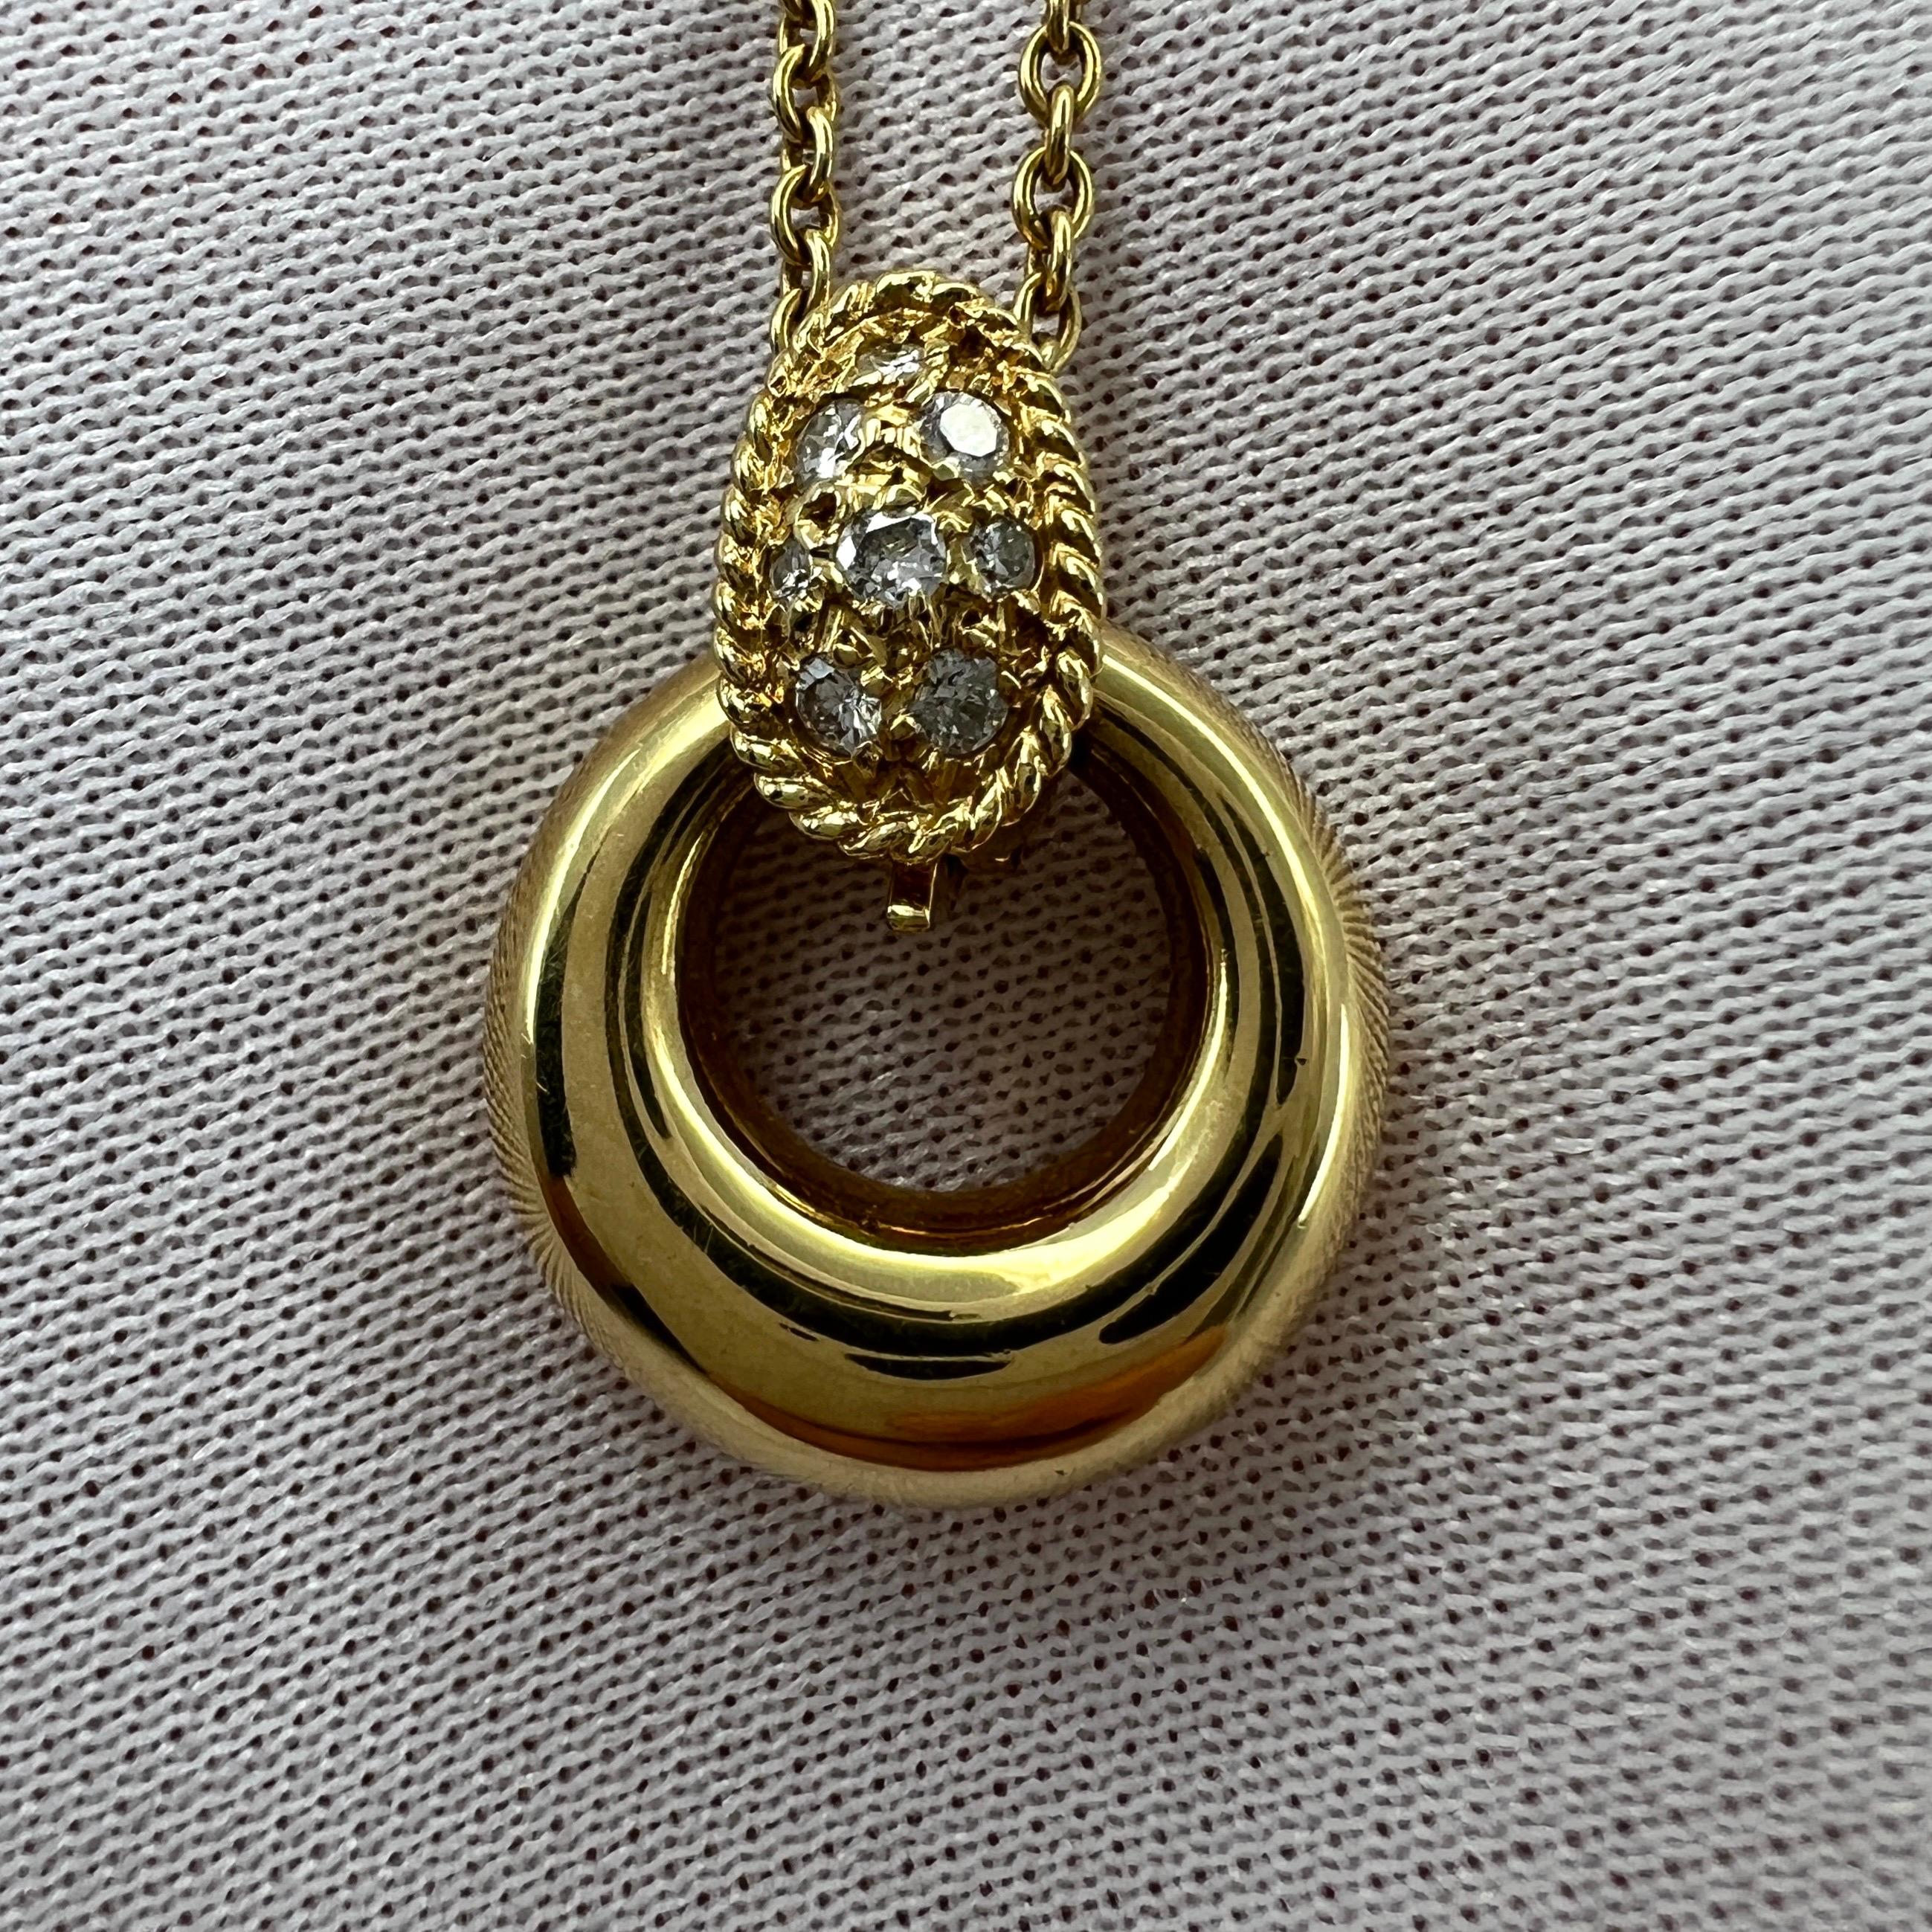 Rare Vintage Van Cleef & Arpels Round Diamond 18k Yellow Gold Pendant Necklace For Sale 2